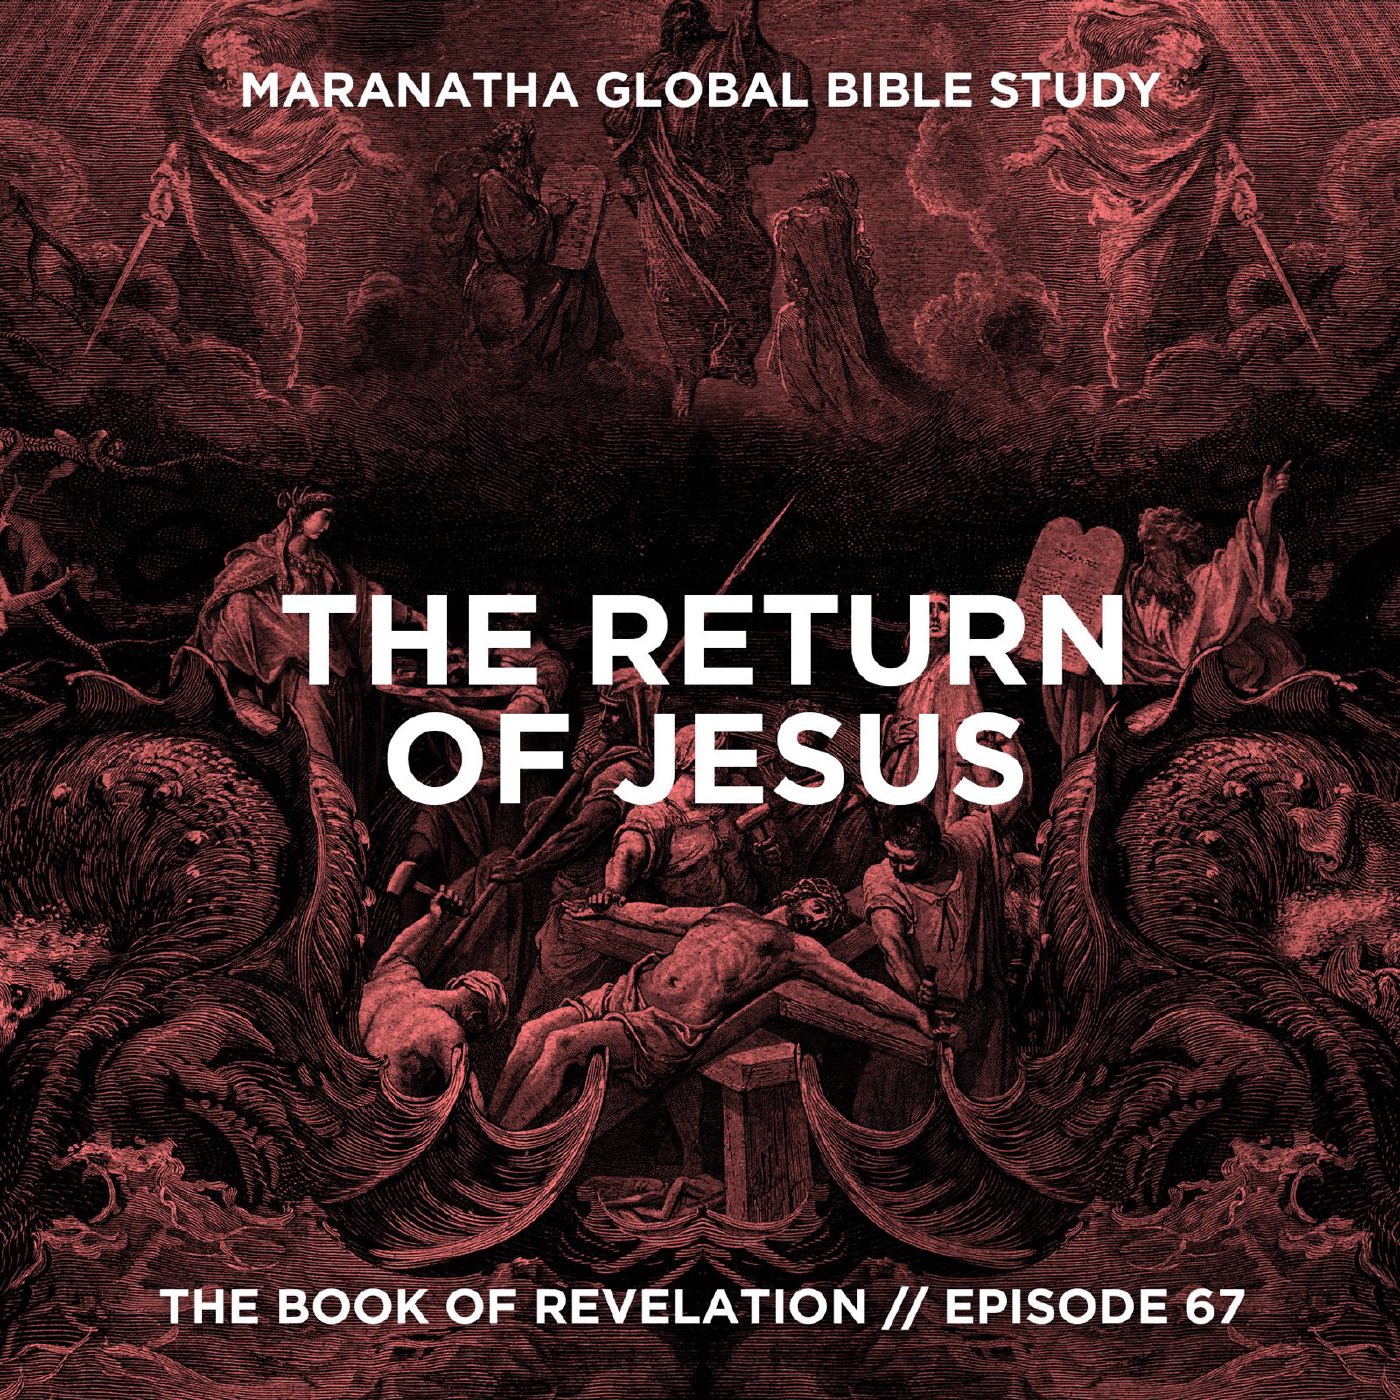 The Return of Jesus // THE BOOK OF REVELATION with JOEL RICHARDSON